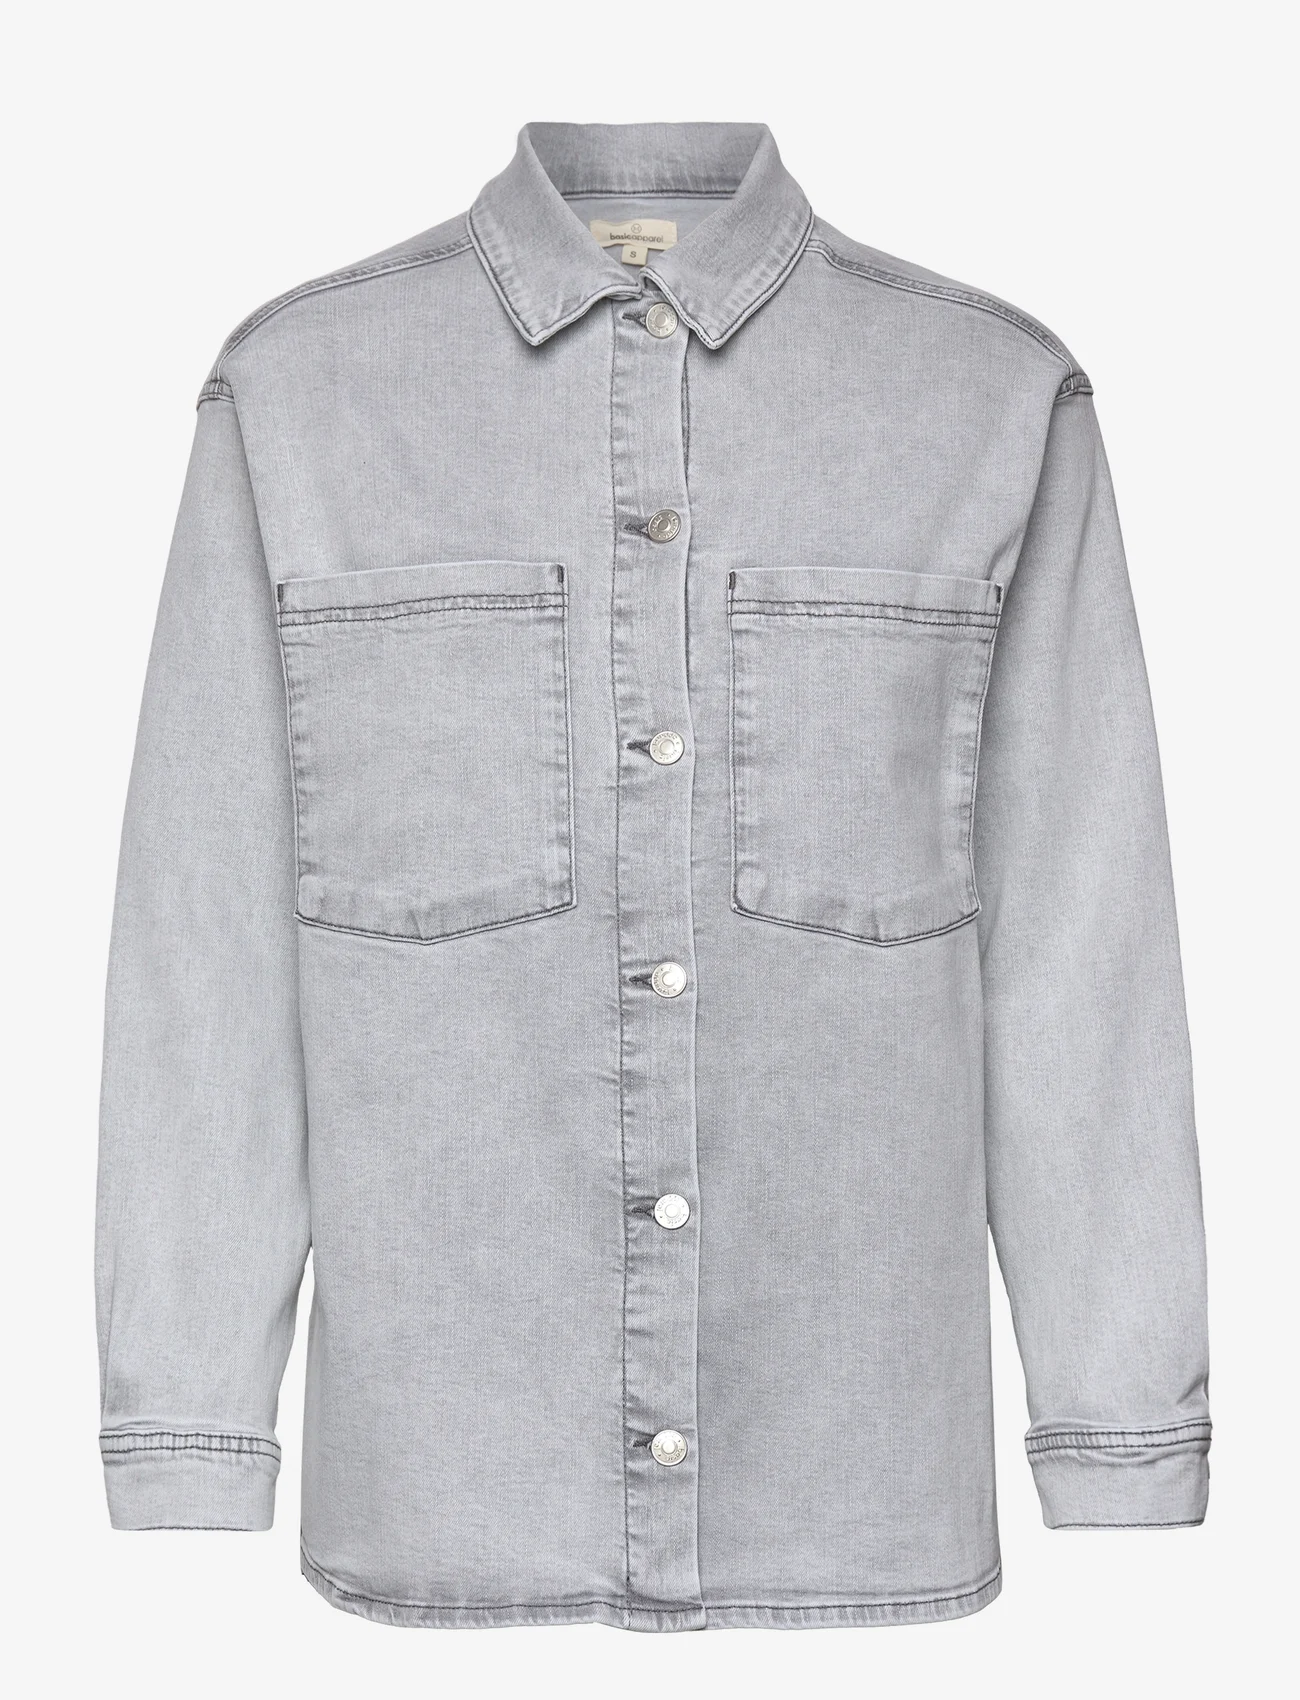 Basic Apparel - Etta Shirt - grey - 0